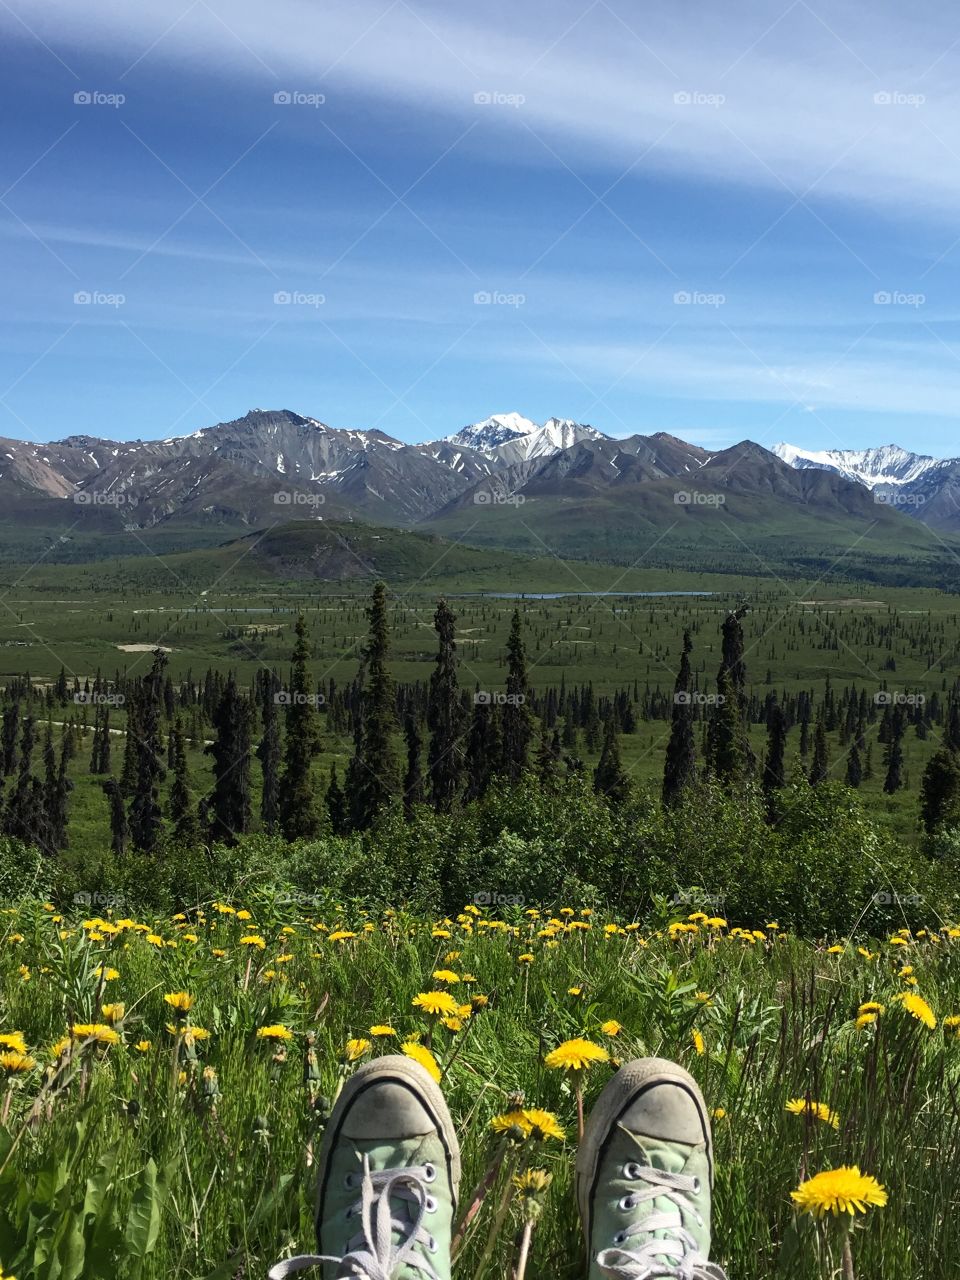 Stretching my legs during my Alaskan road trip.